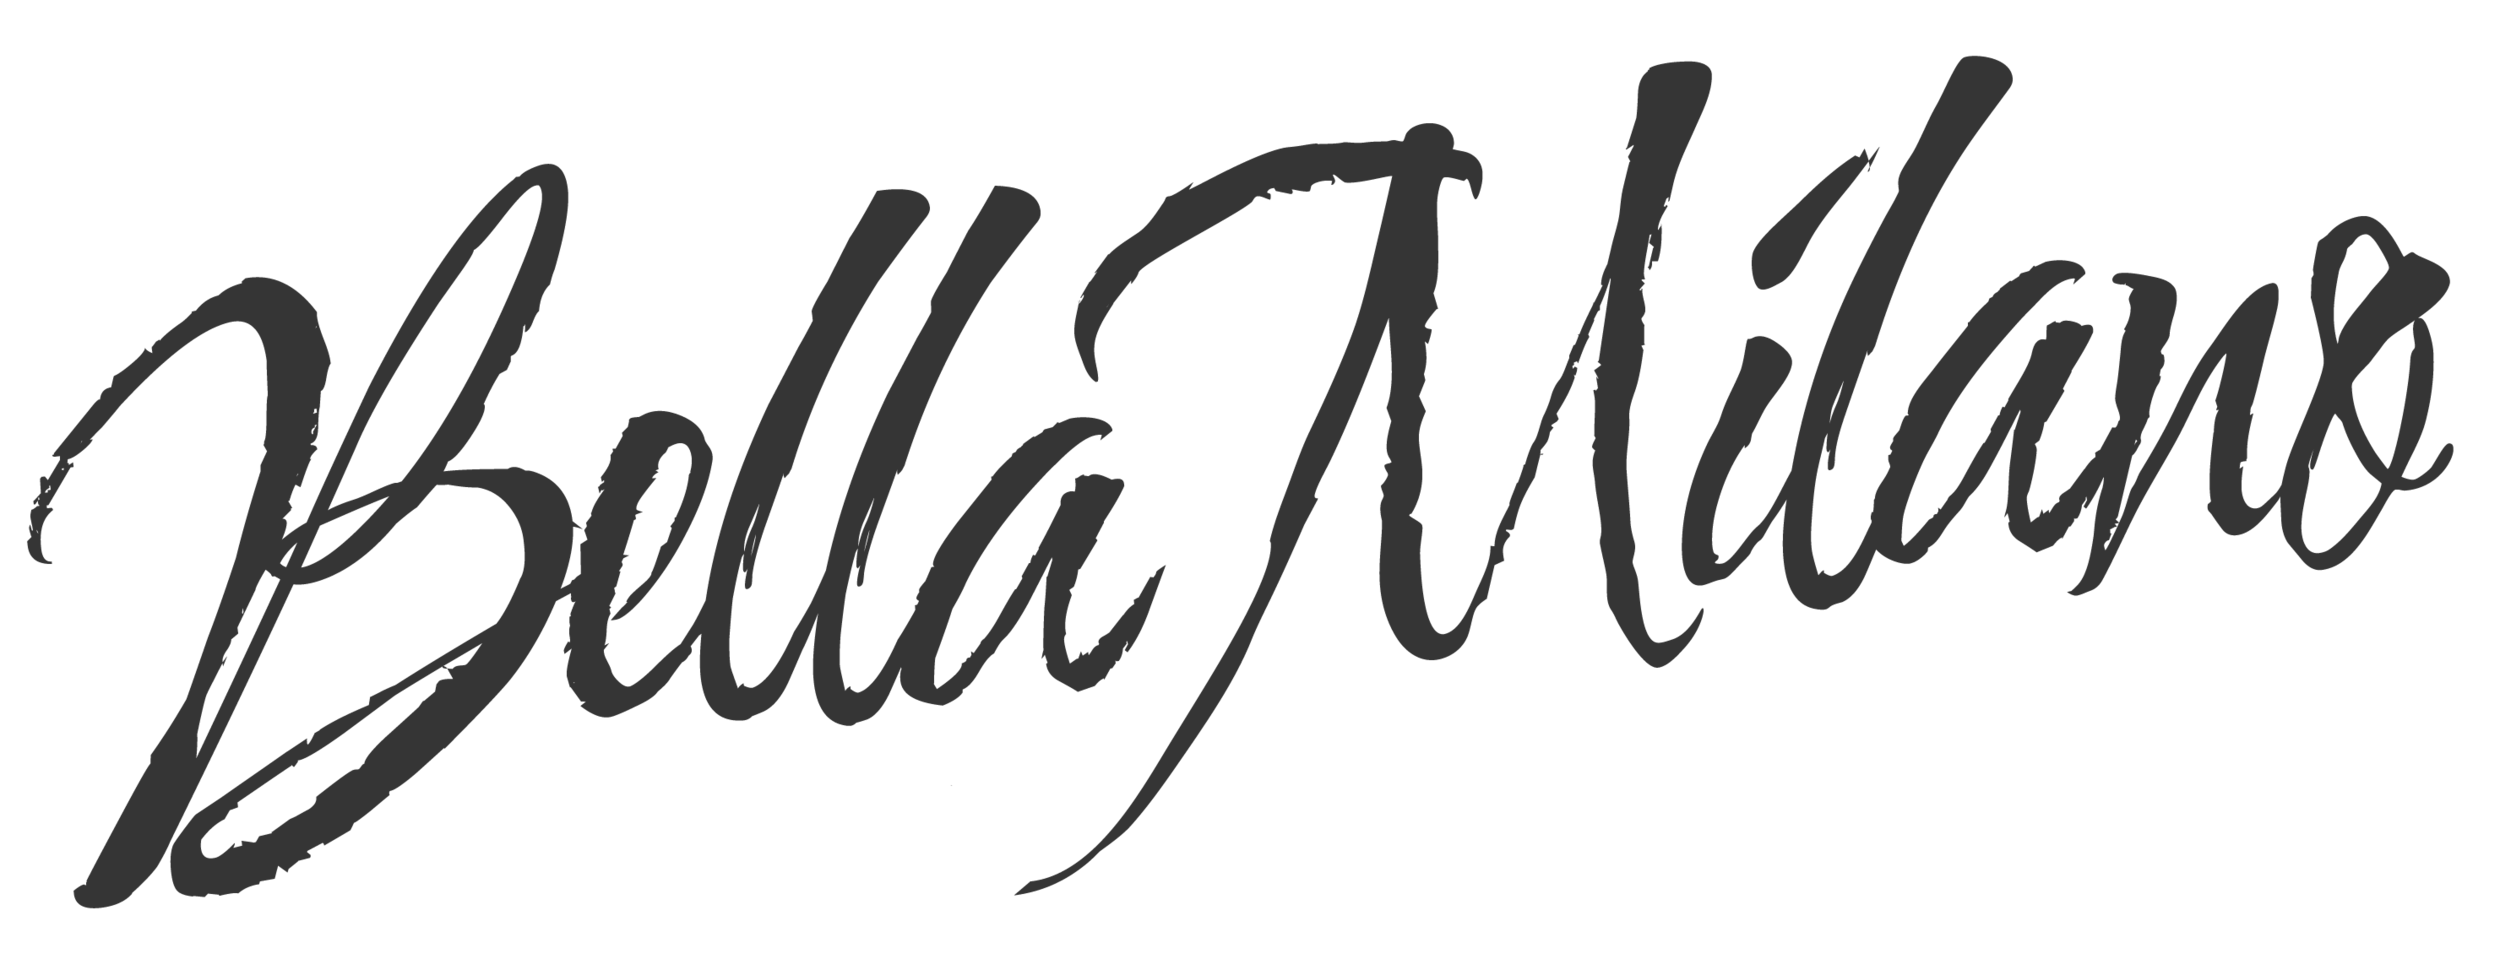 2017-bella-logo-gray.png